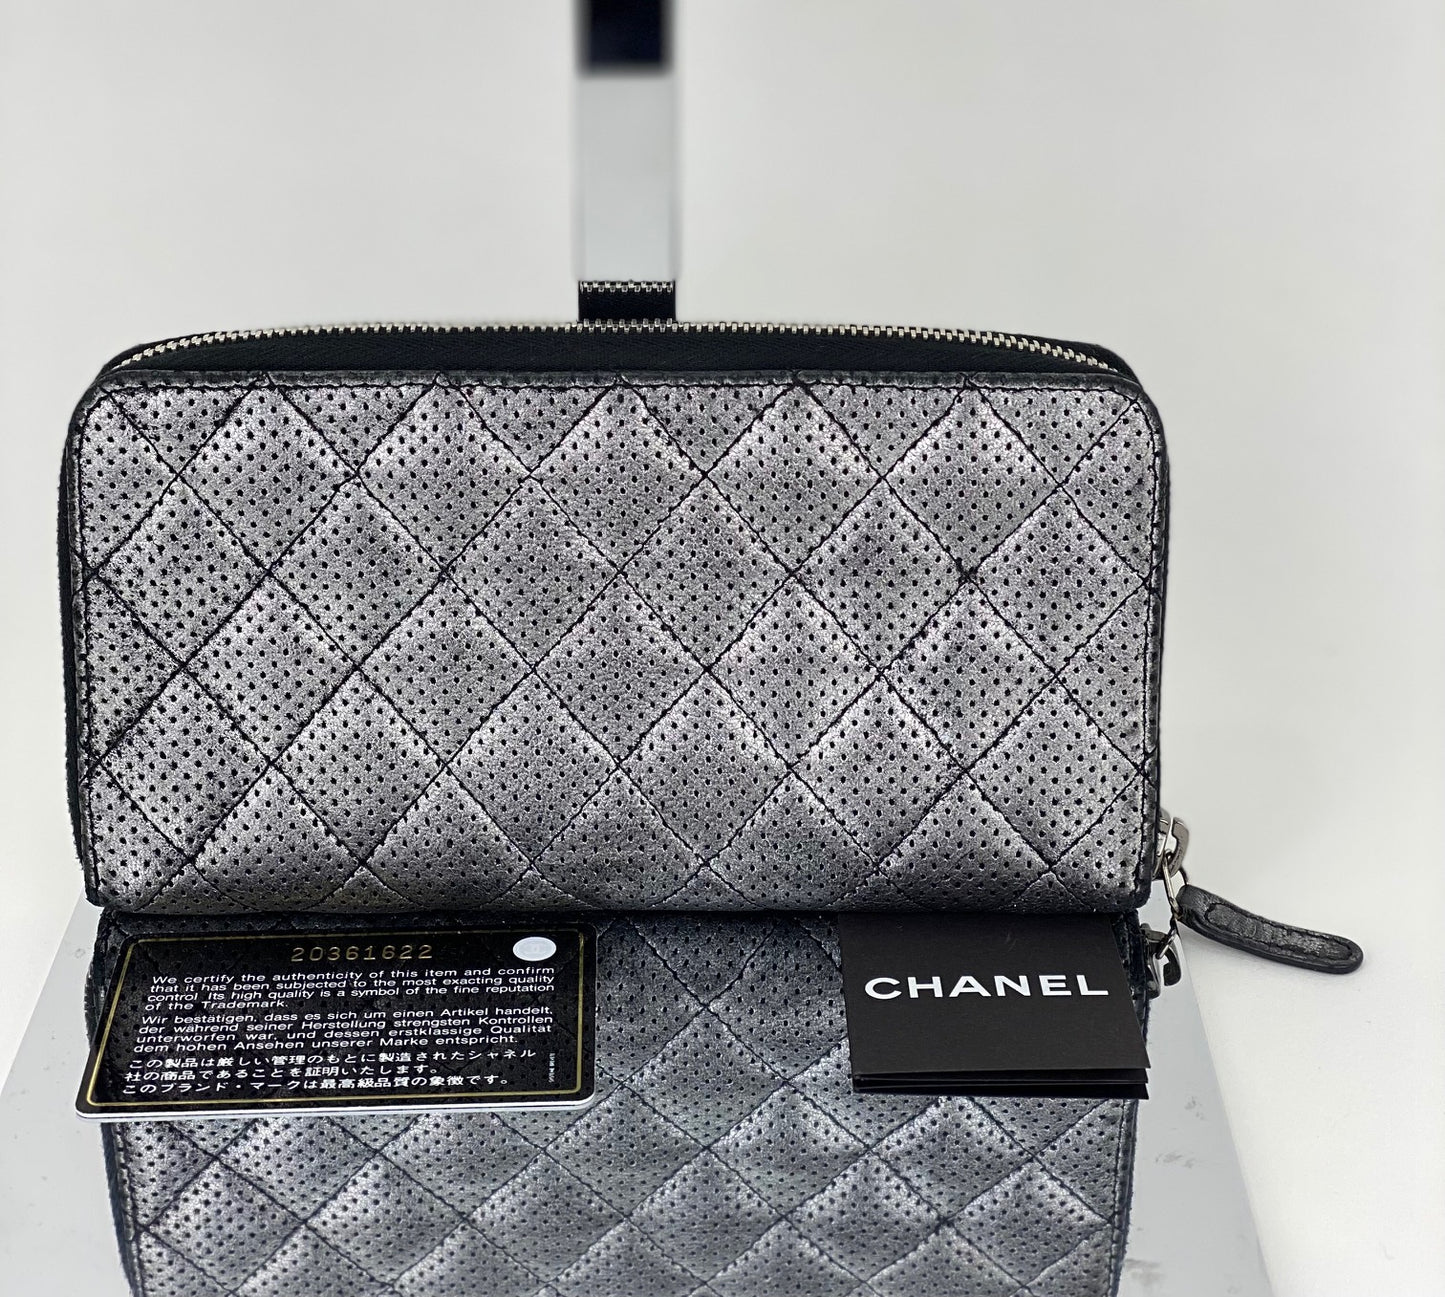 Chanel Metallic Crumpled Silver Tone Clutch - Janet Mandell